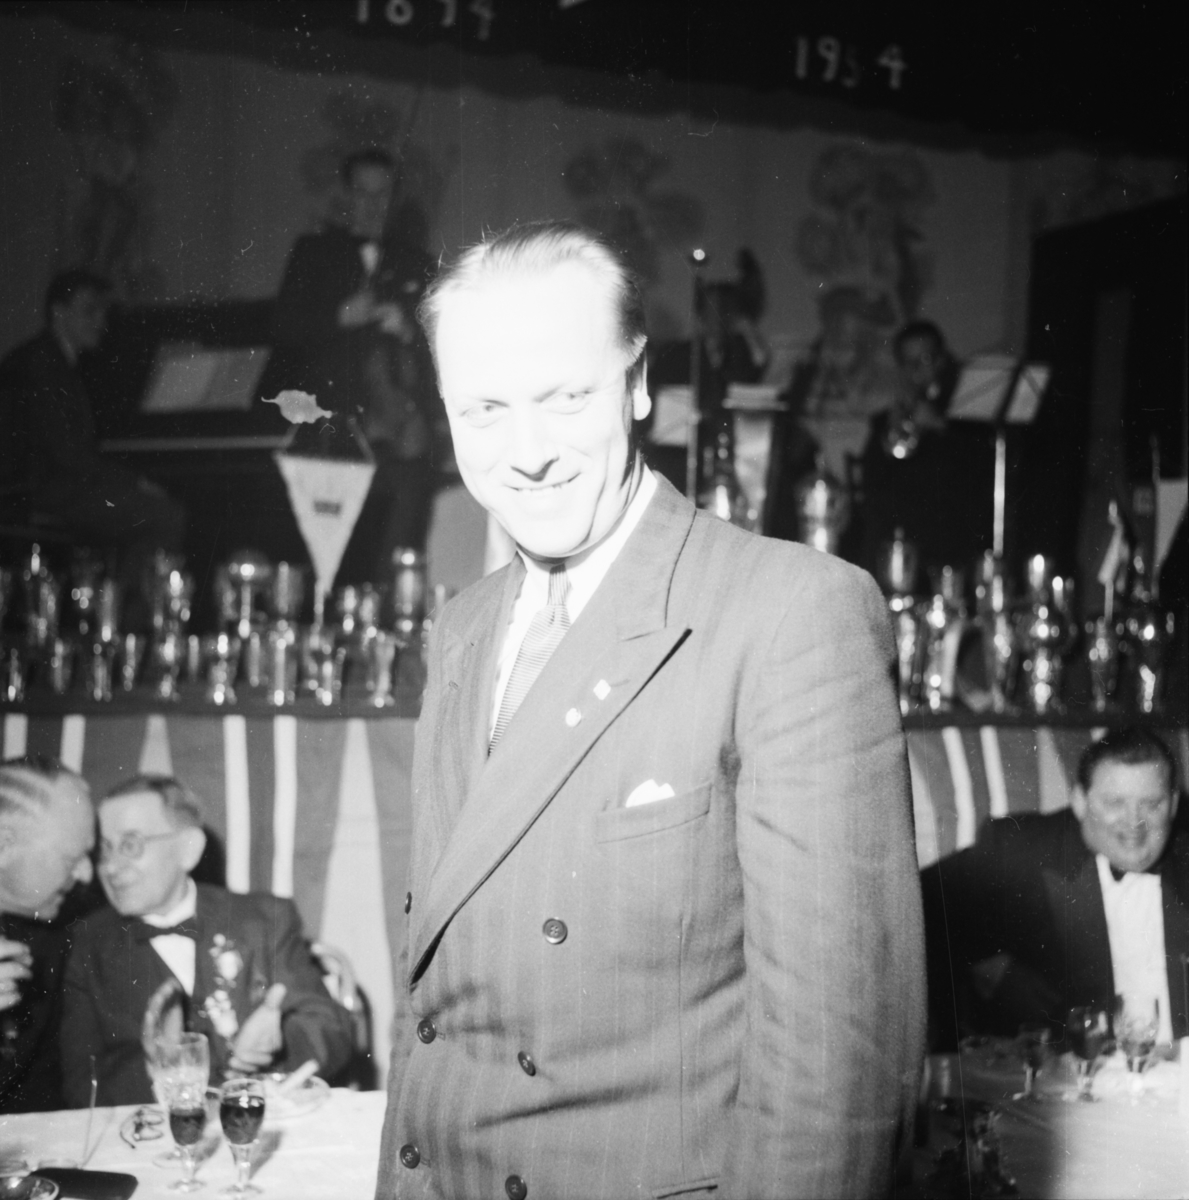 Vardens arkiv. "Odd Ballklubbs 60års jubileumsfest i Festiviteten" 03.04.1954